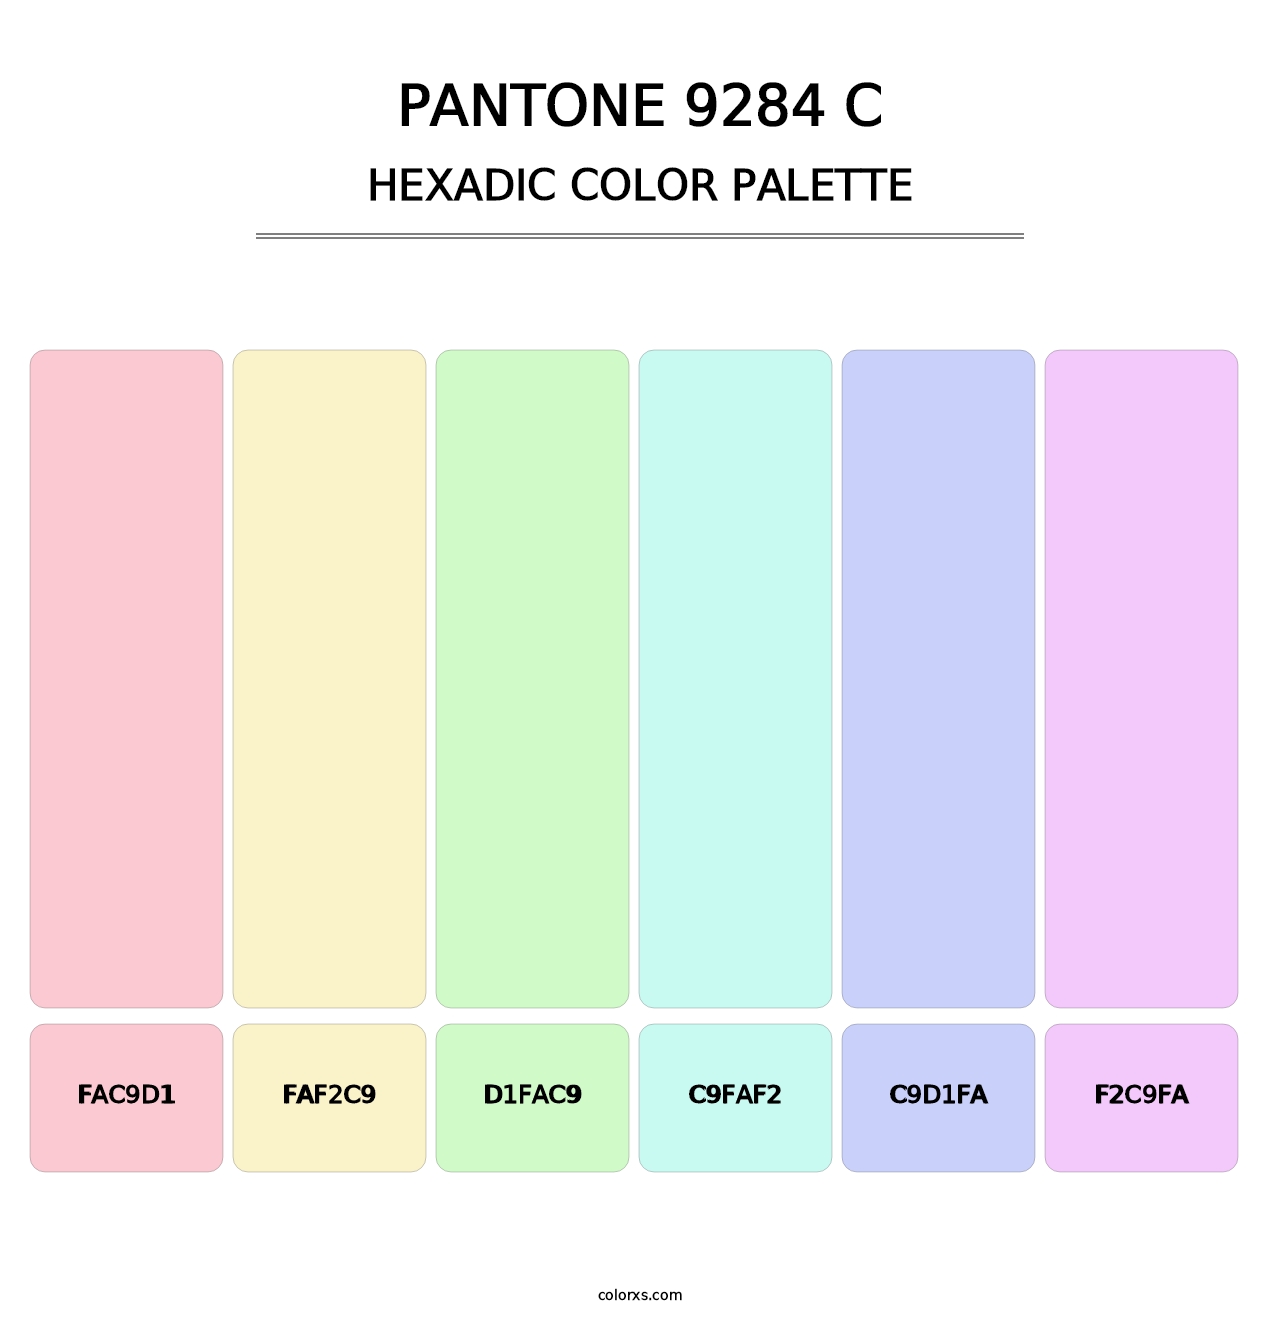 PANTONE 9284 C - Hexadic Color Palette